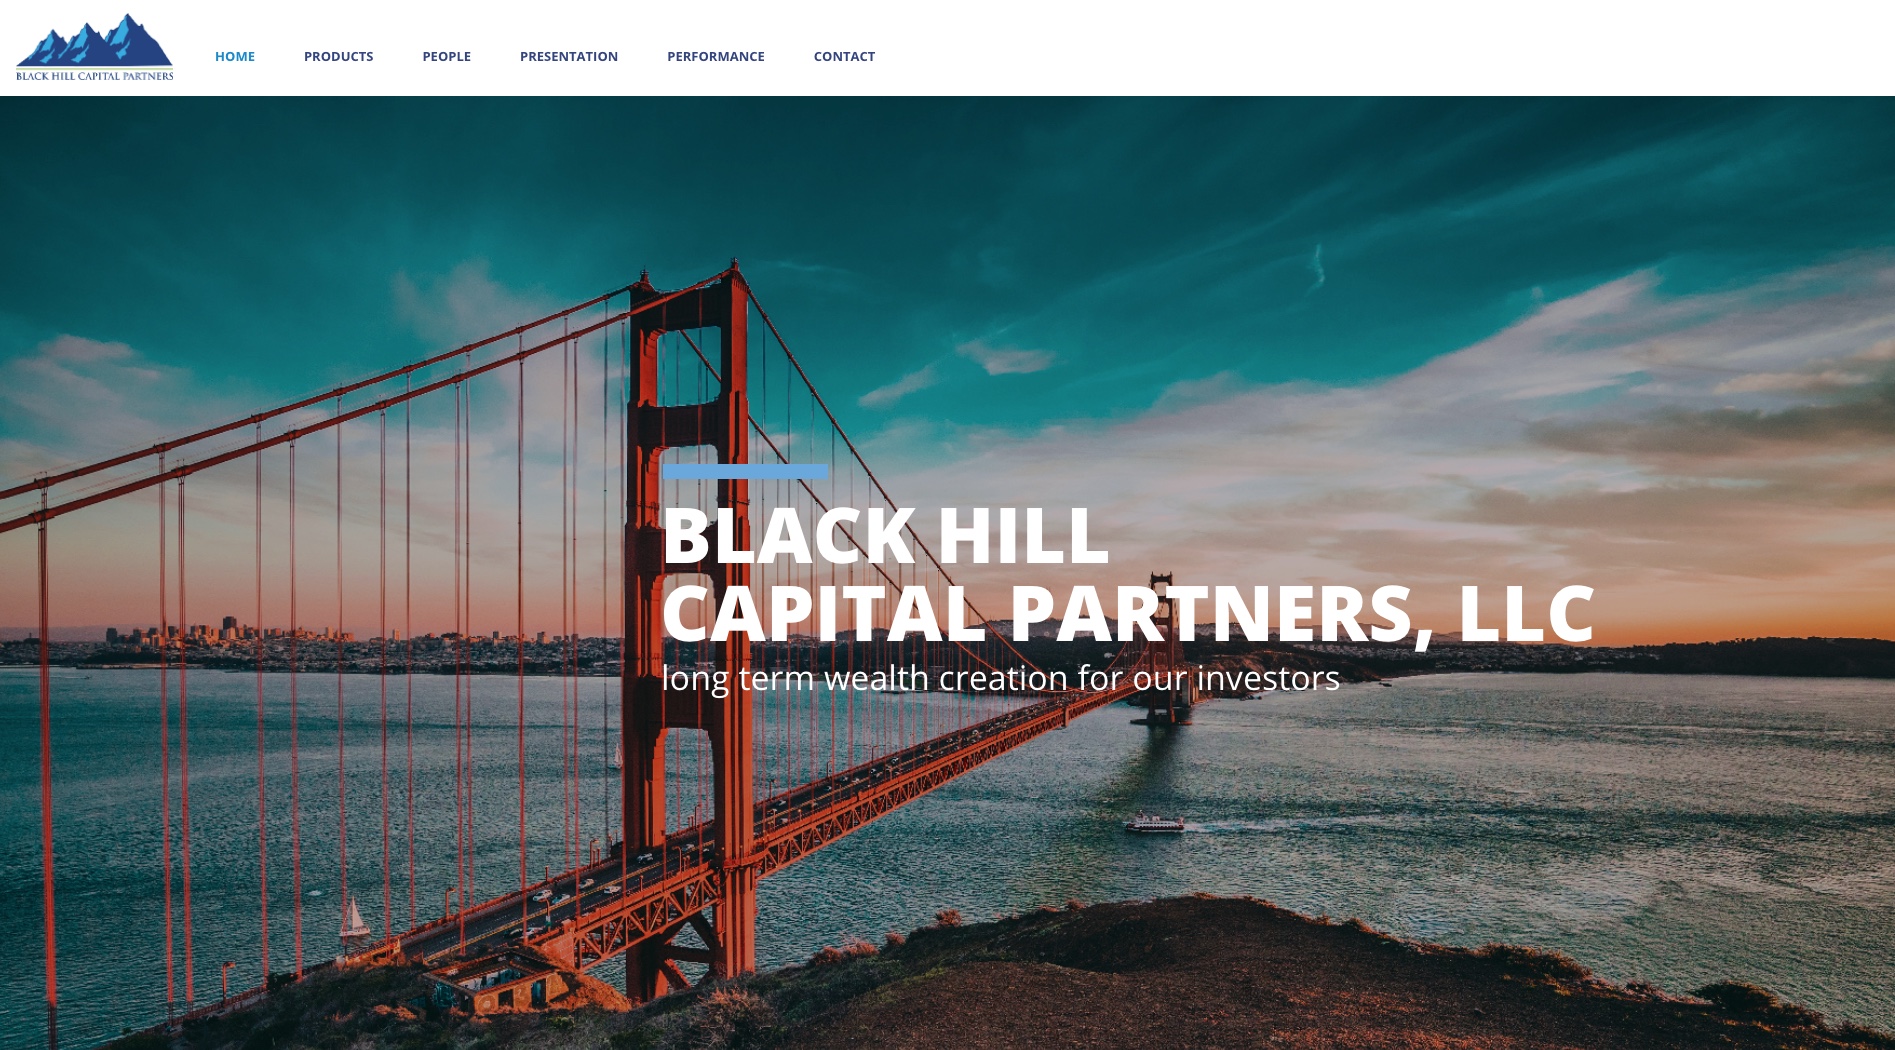 Blackhill Capital Partners, LLC